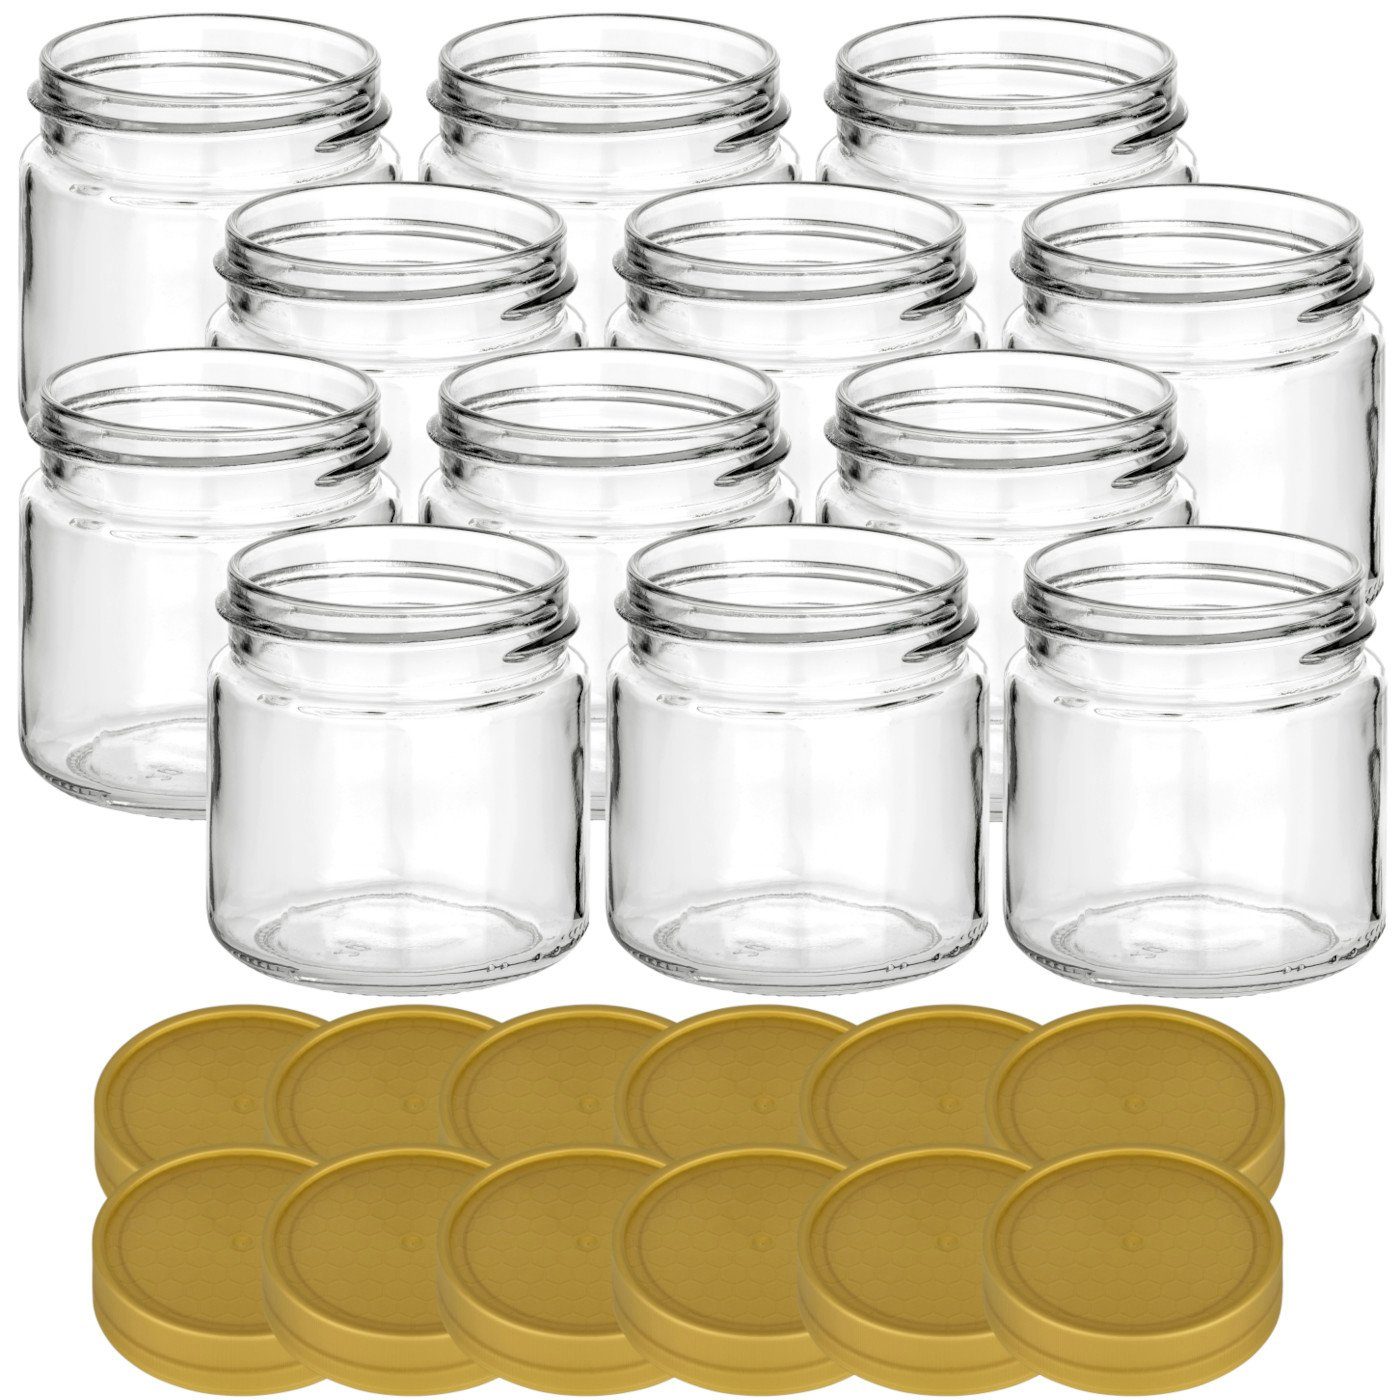 Kunststoff-Deckel Honigglas gouveo 250g goldfarben - (12-tlg) Leere Marmeladengläser, mit